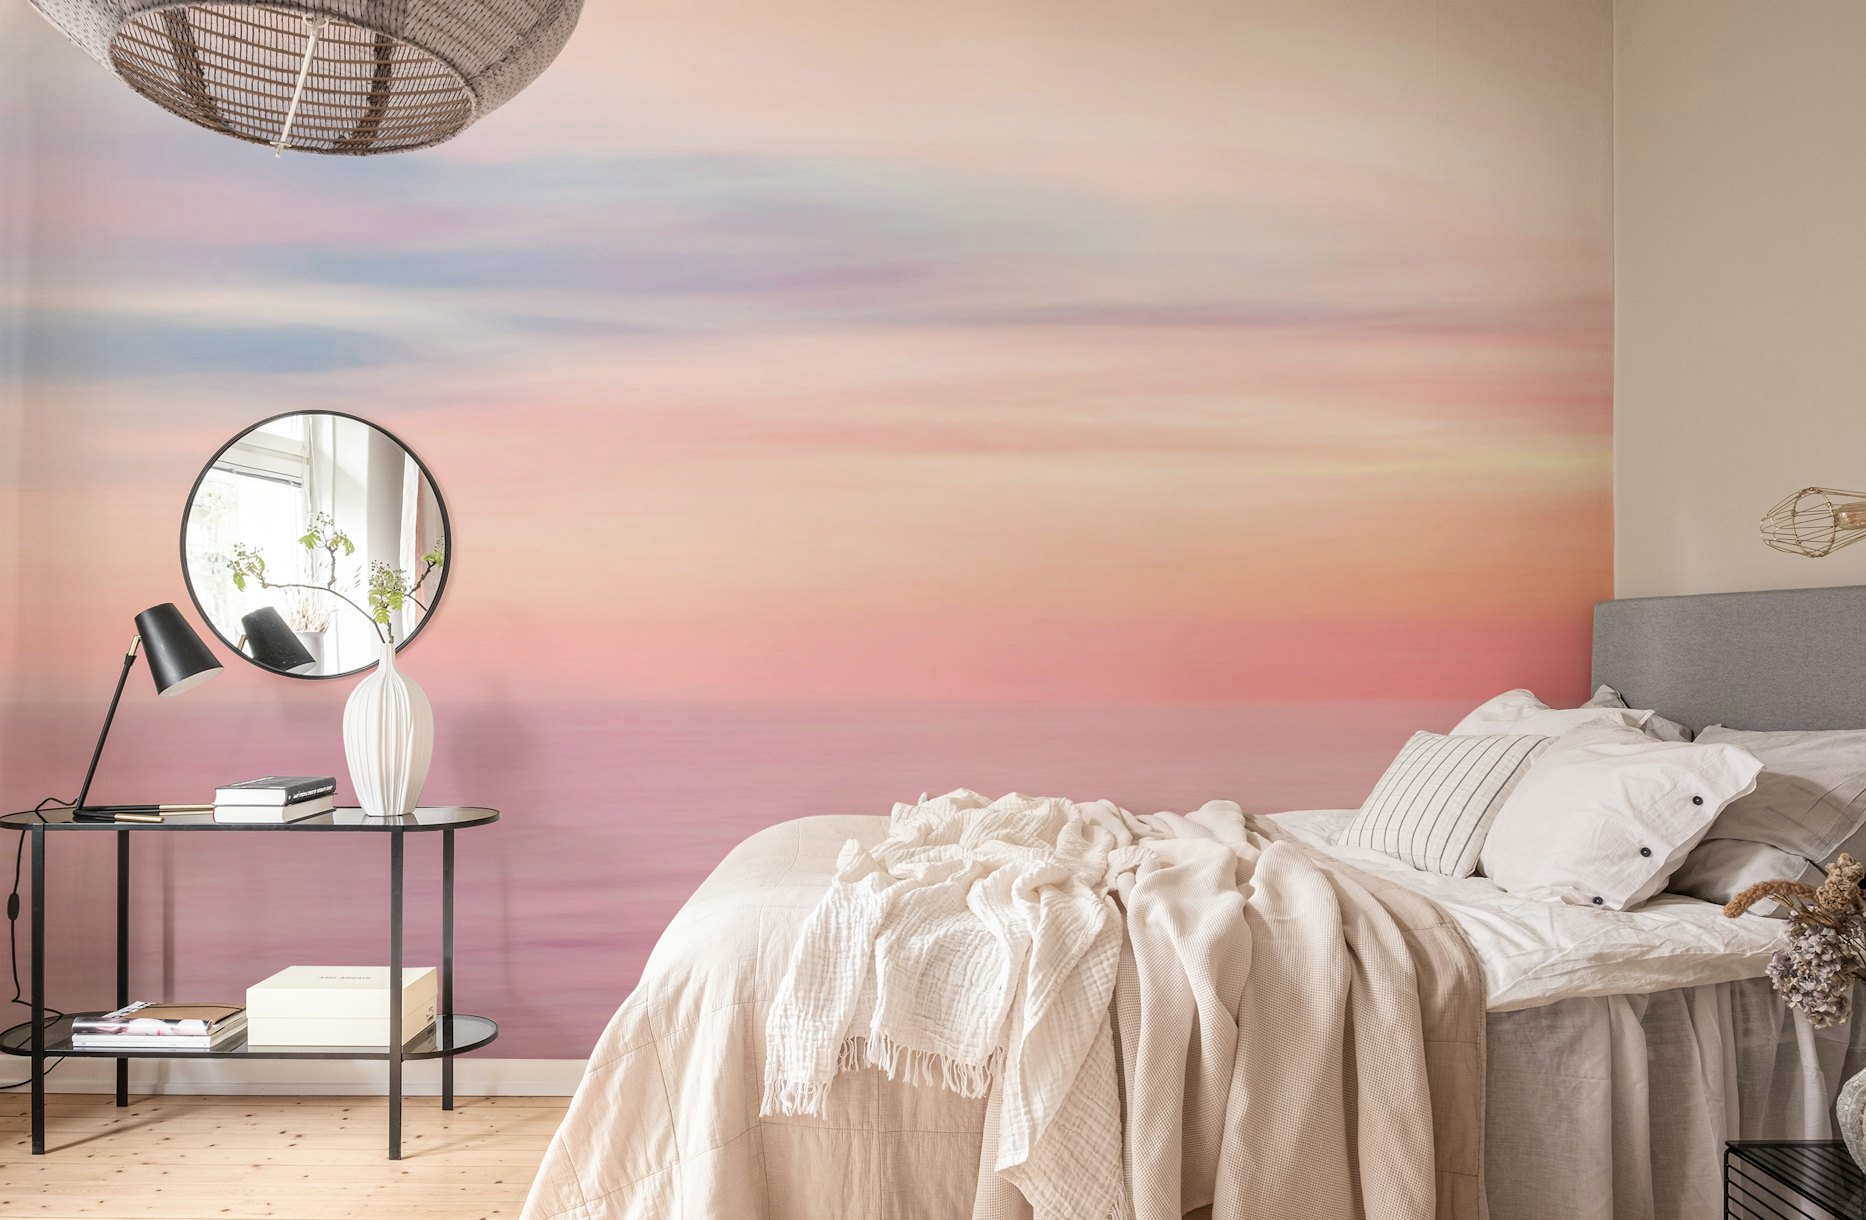 Pink sunset sky on ocean wallpaper